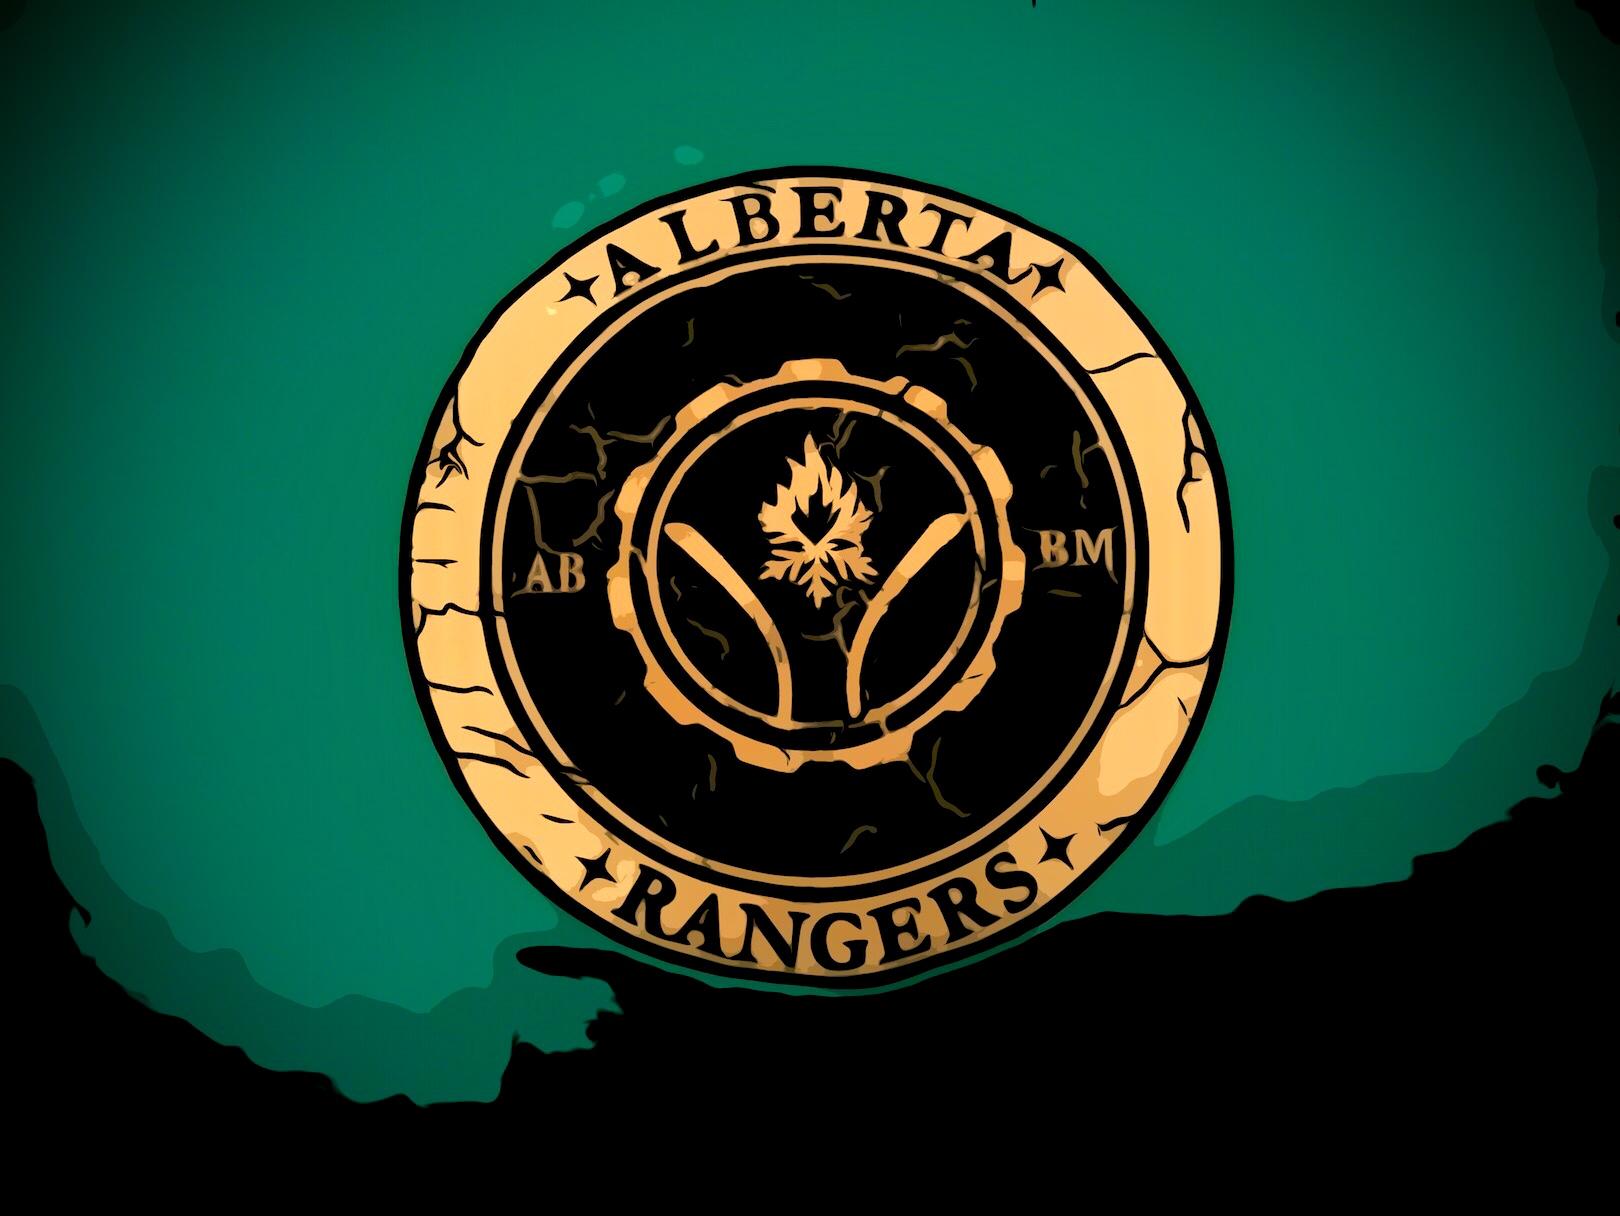 Seeking Alberta Rangers - Cover Image